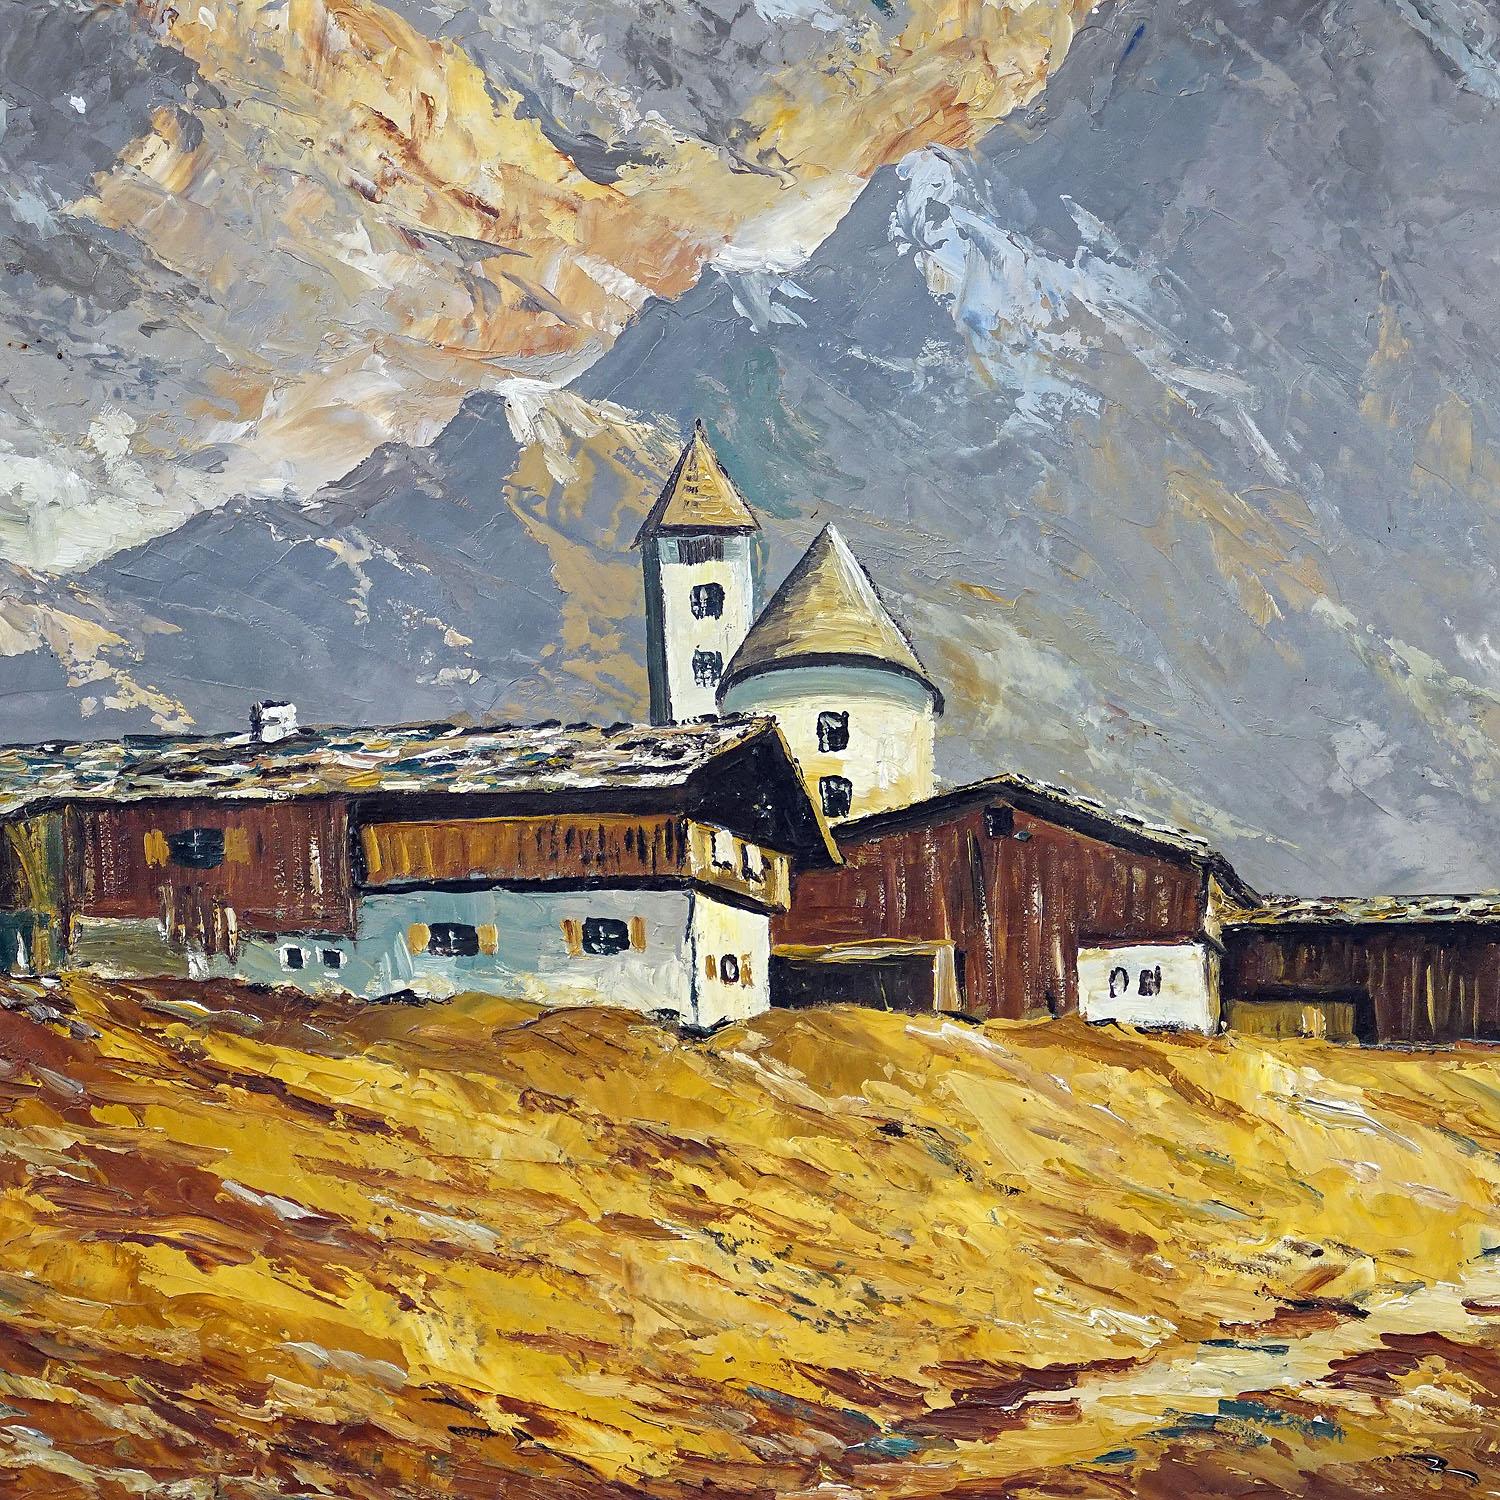 German Alpine Landscape Oil Painting with Tyrolian Mountain Village For Sale